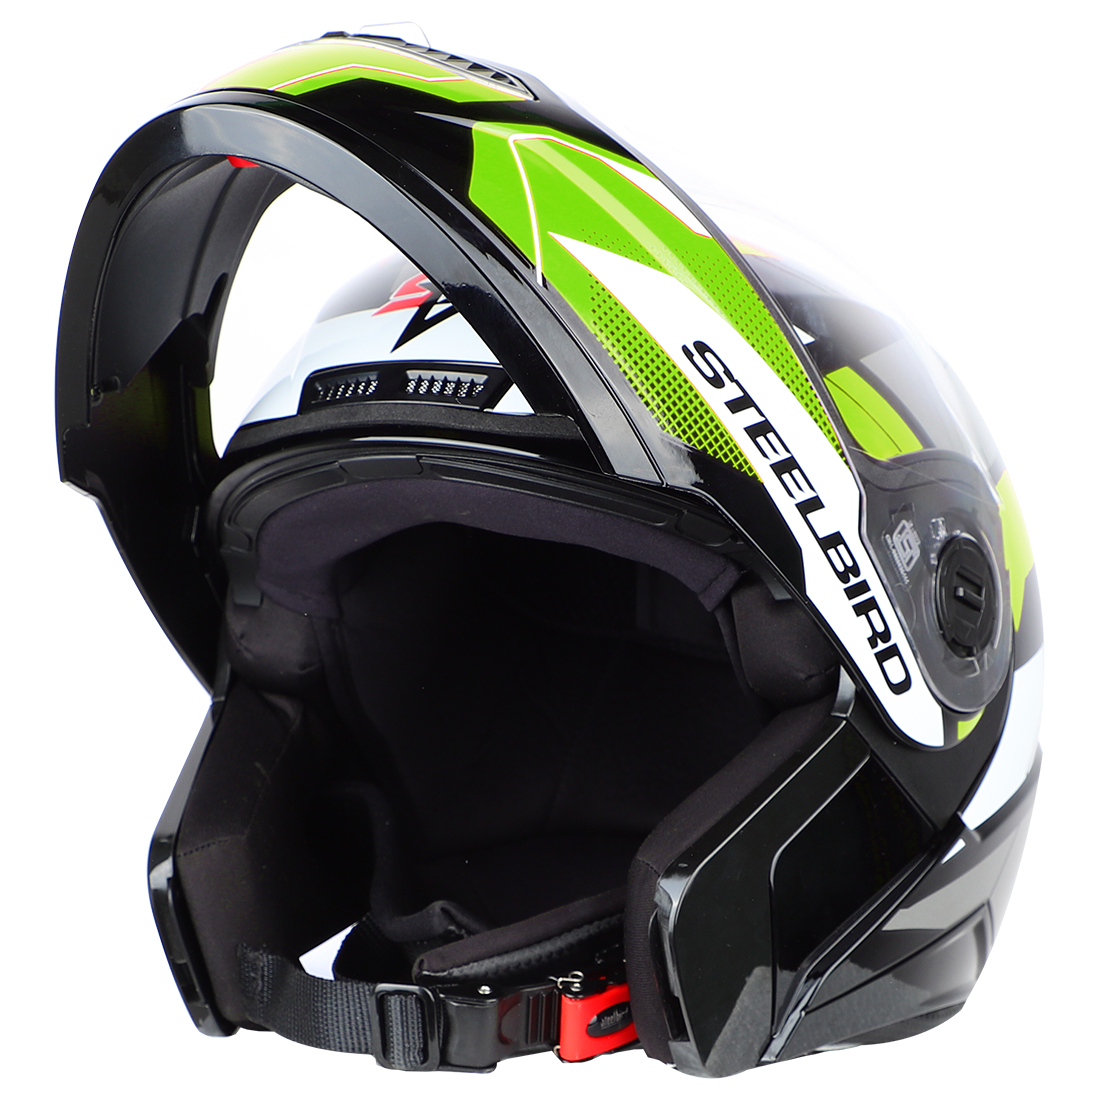 Steelbird SBA-7 Huracan ISI Certified Flip-Up Helmet For Men And Women (Glossy Black Neon With Clear Visor)